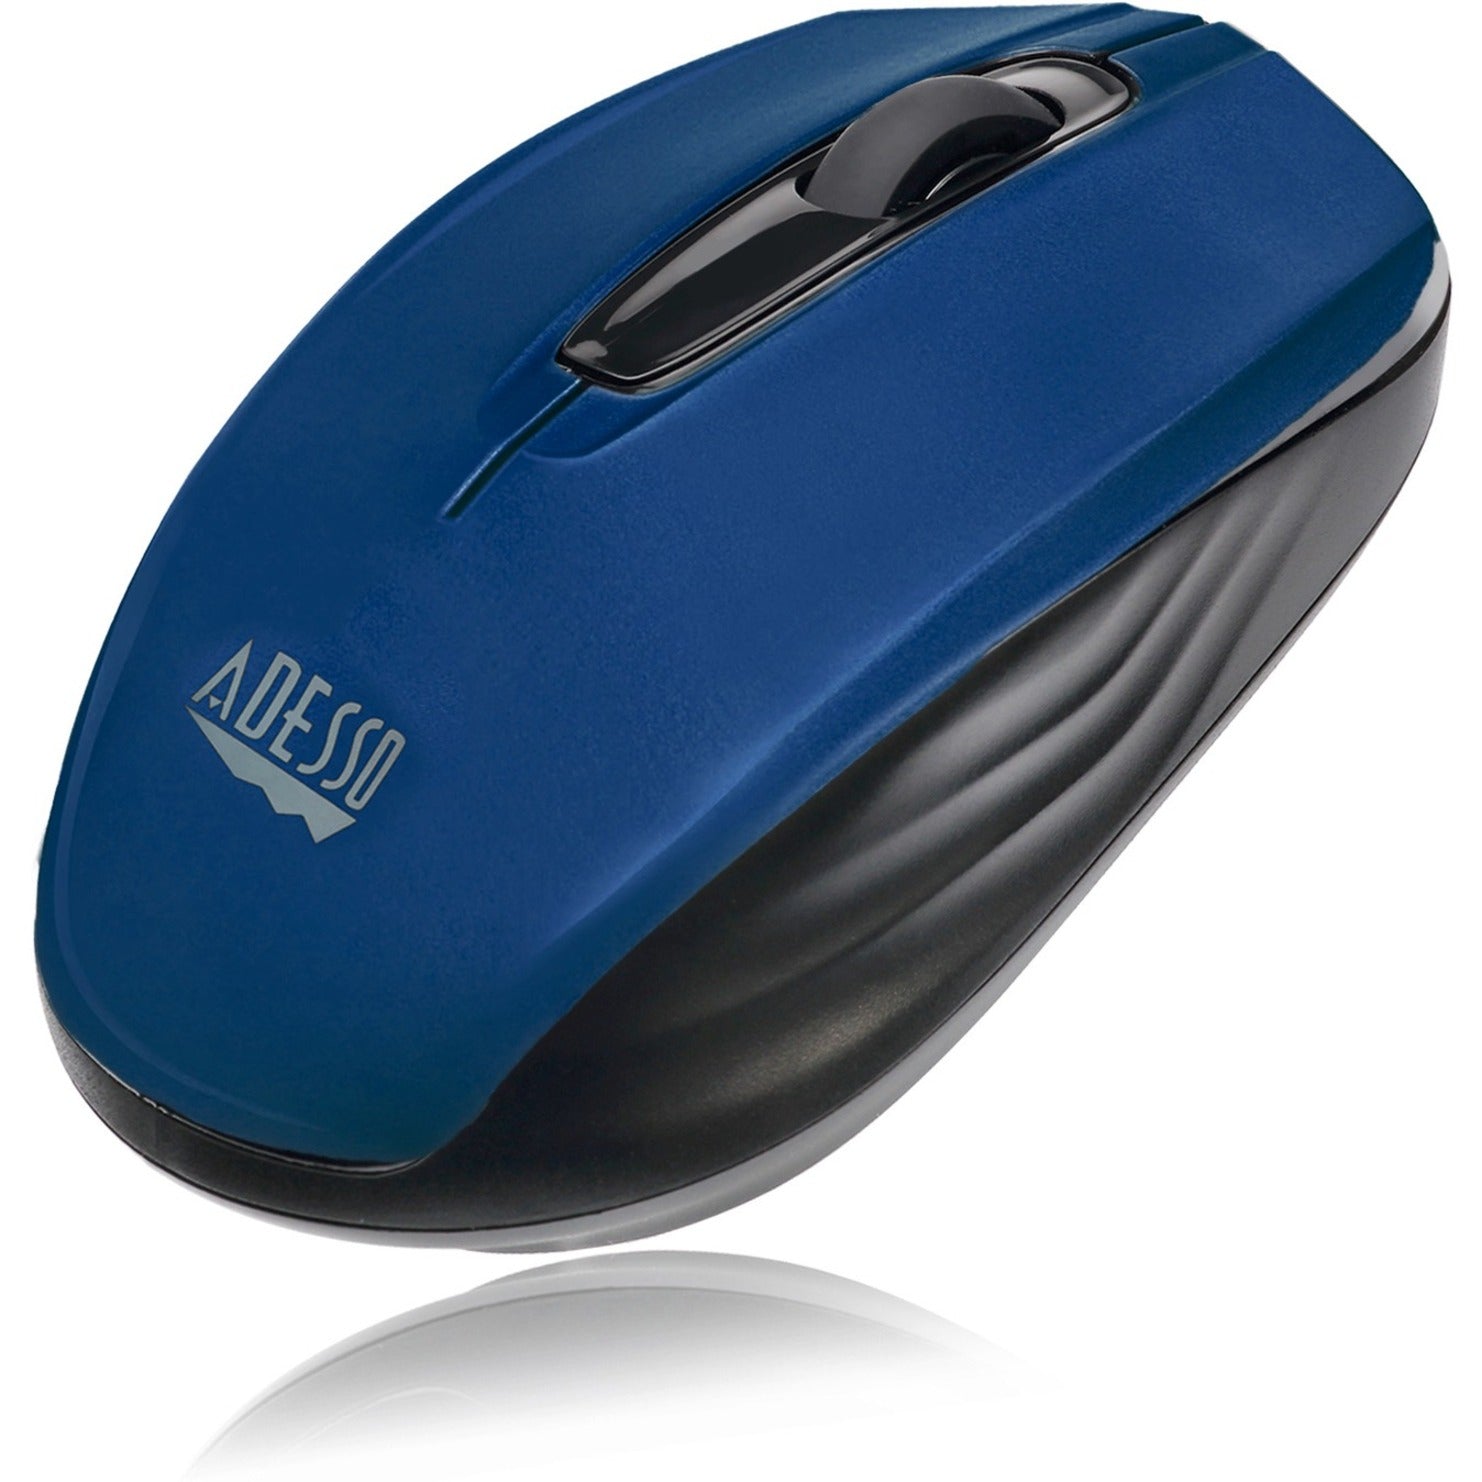 Adesso iMouse S50L 2.4GHz Wireless Mini Mouse, Ergonomic Fit, 1200 DPI, Blue